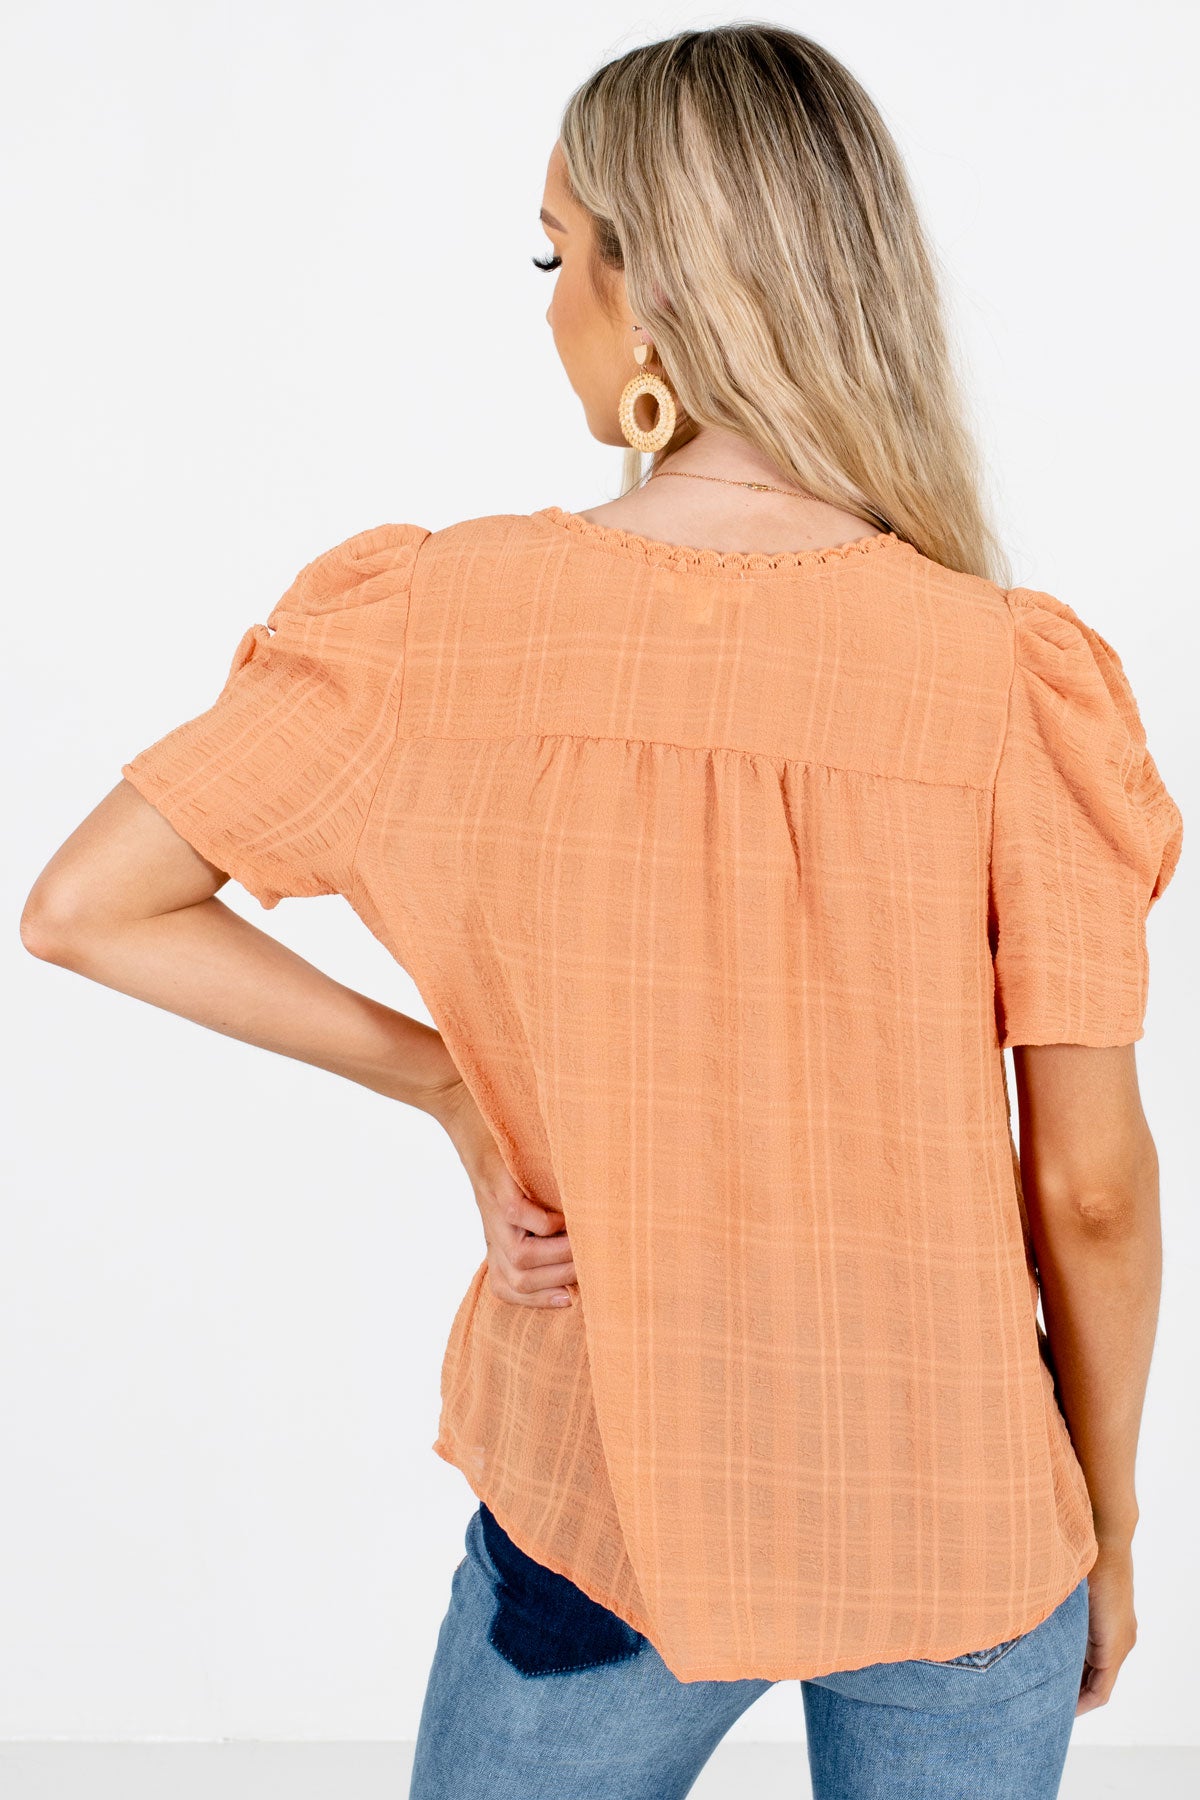 Women's Light Orange Lightweight High-Quality Boutique Blouses